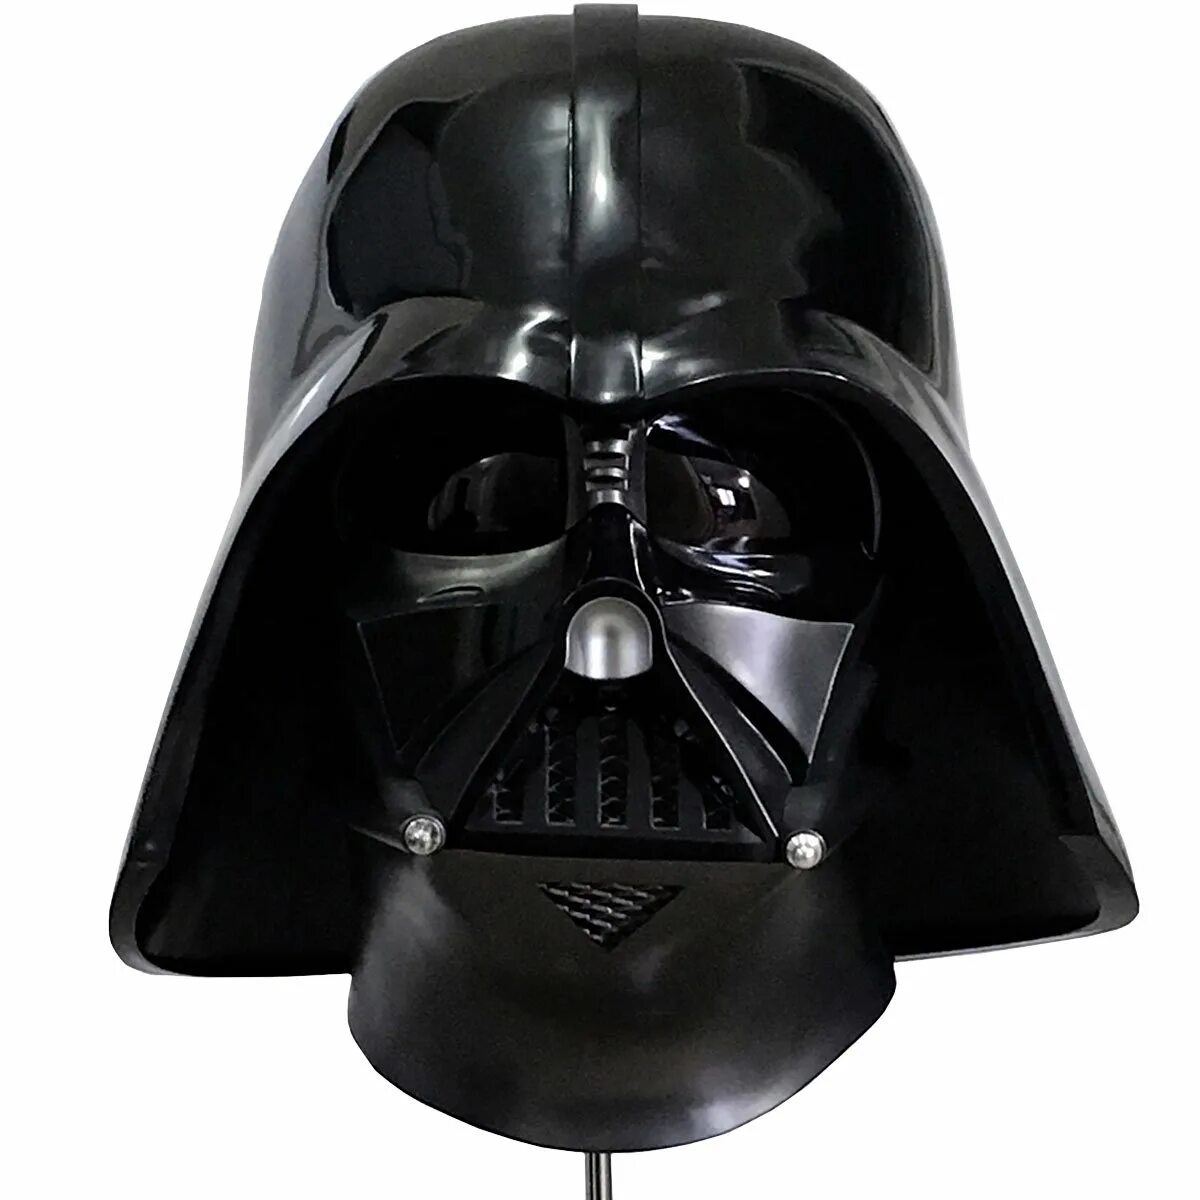 Шлем Star Wars Дарта Вейдера. Darth Vader шлем. Звёздные войны Дарт Вейдер без маски. Дарт Вейдер голова. Маска звездные войны дарт